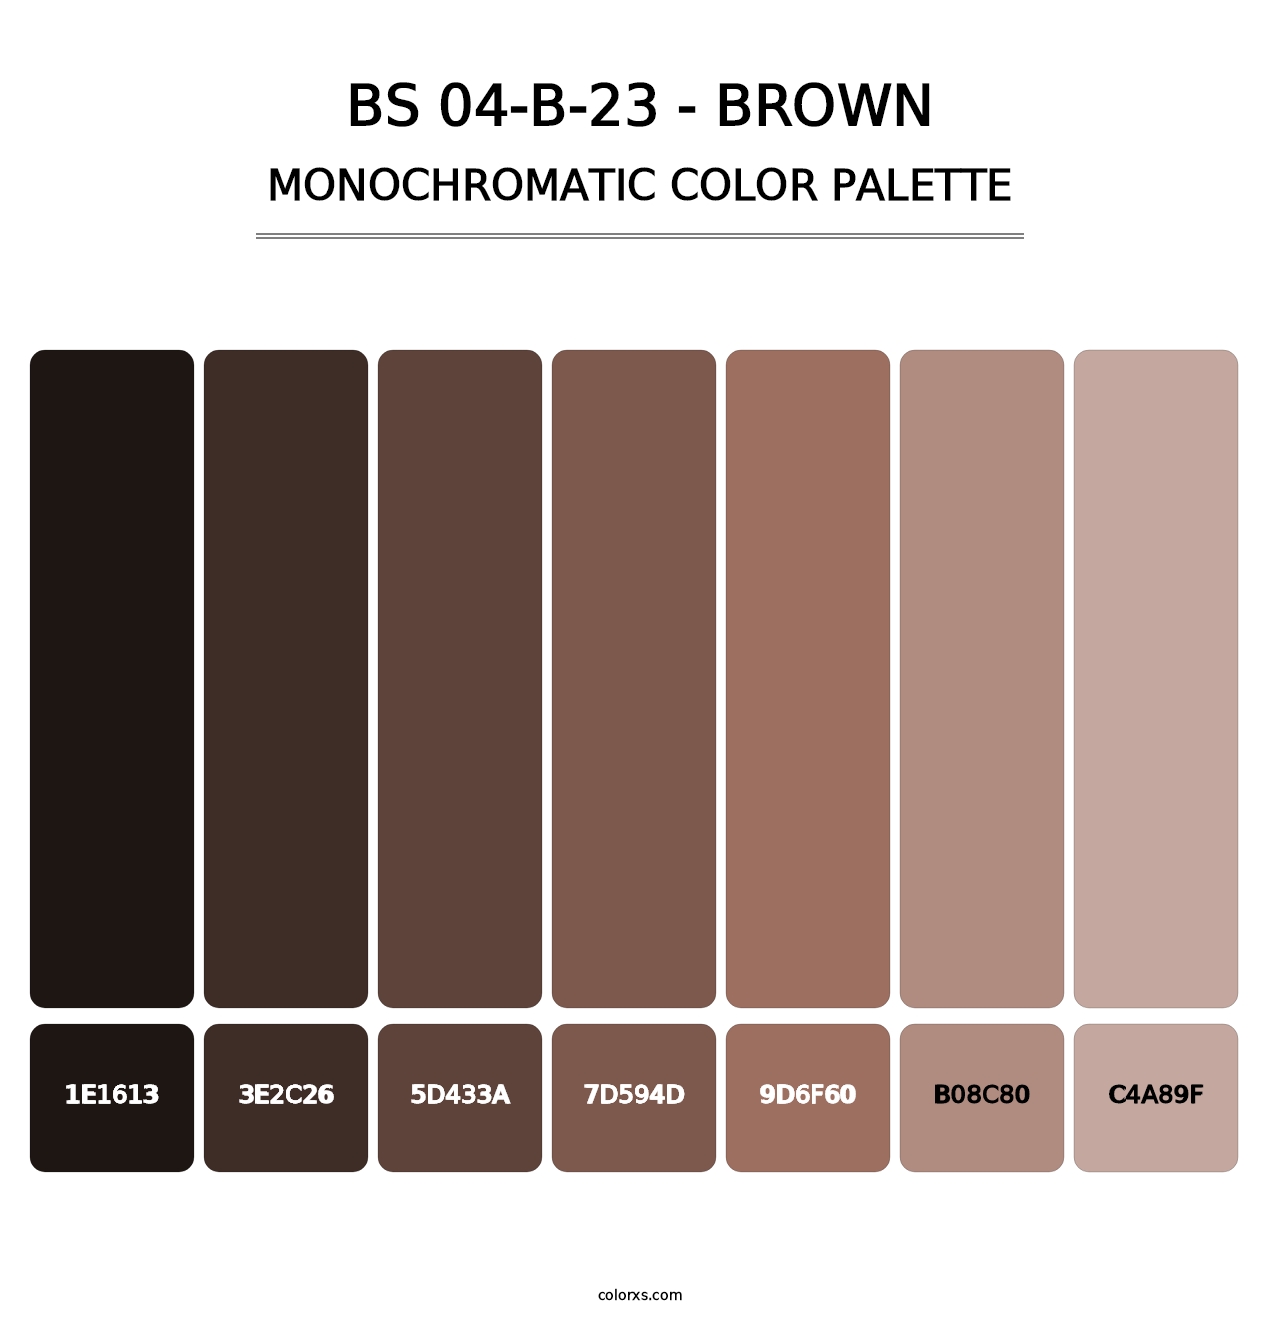 BS 04-B-23 - Brown - Monochromatic Color Palette